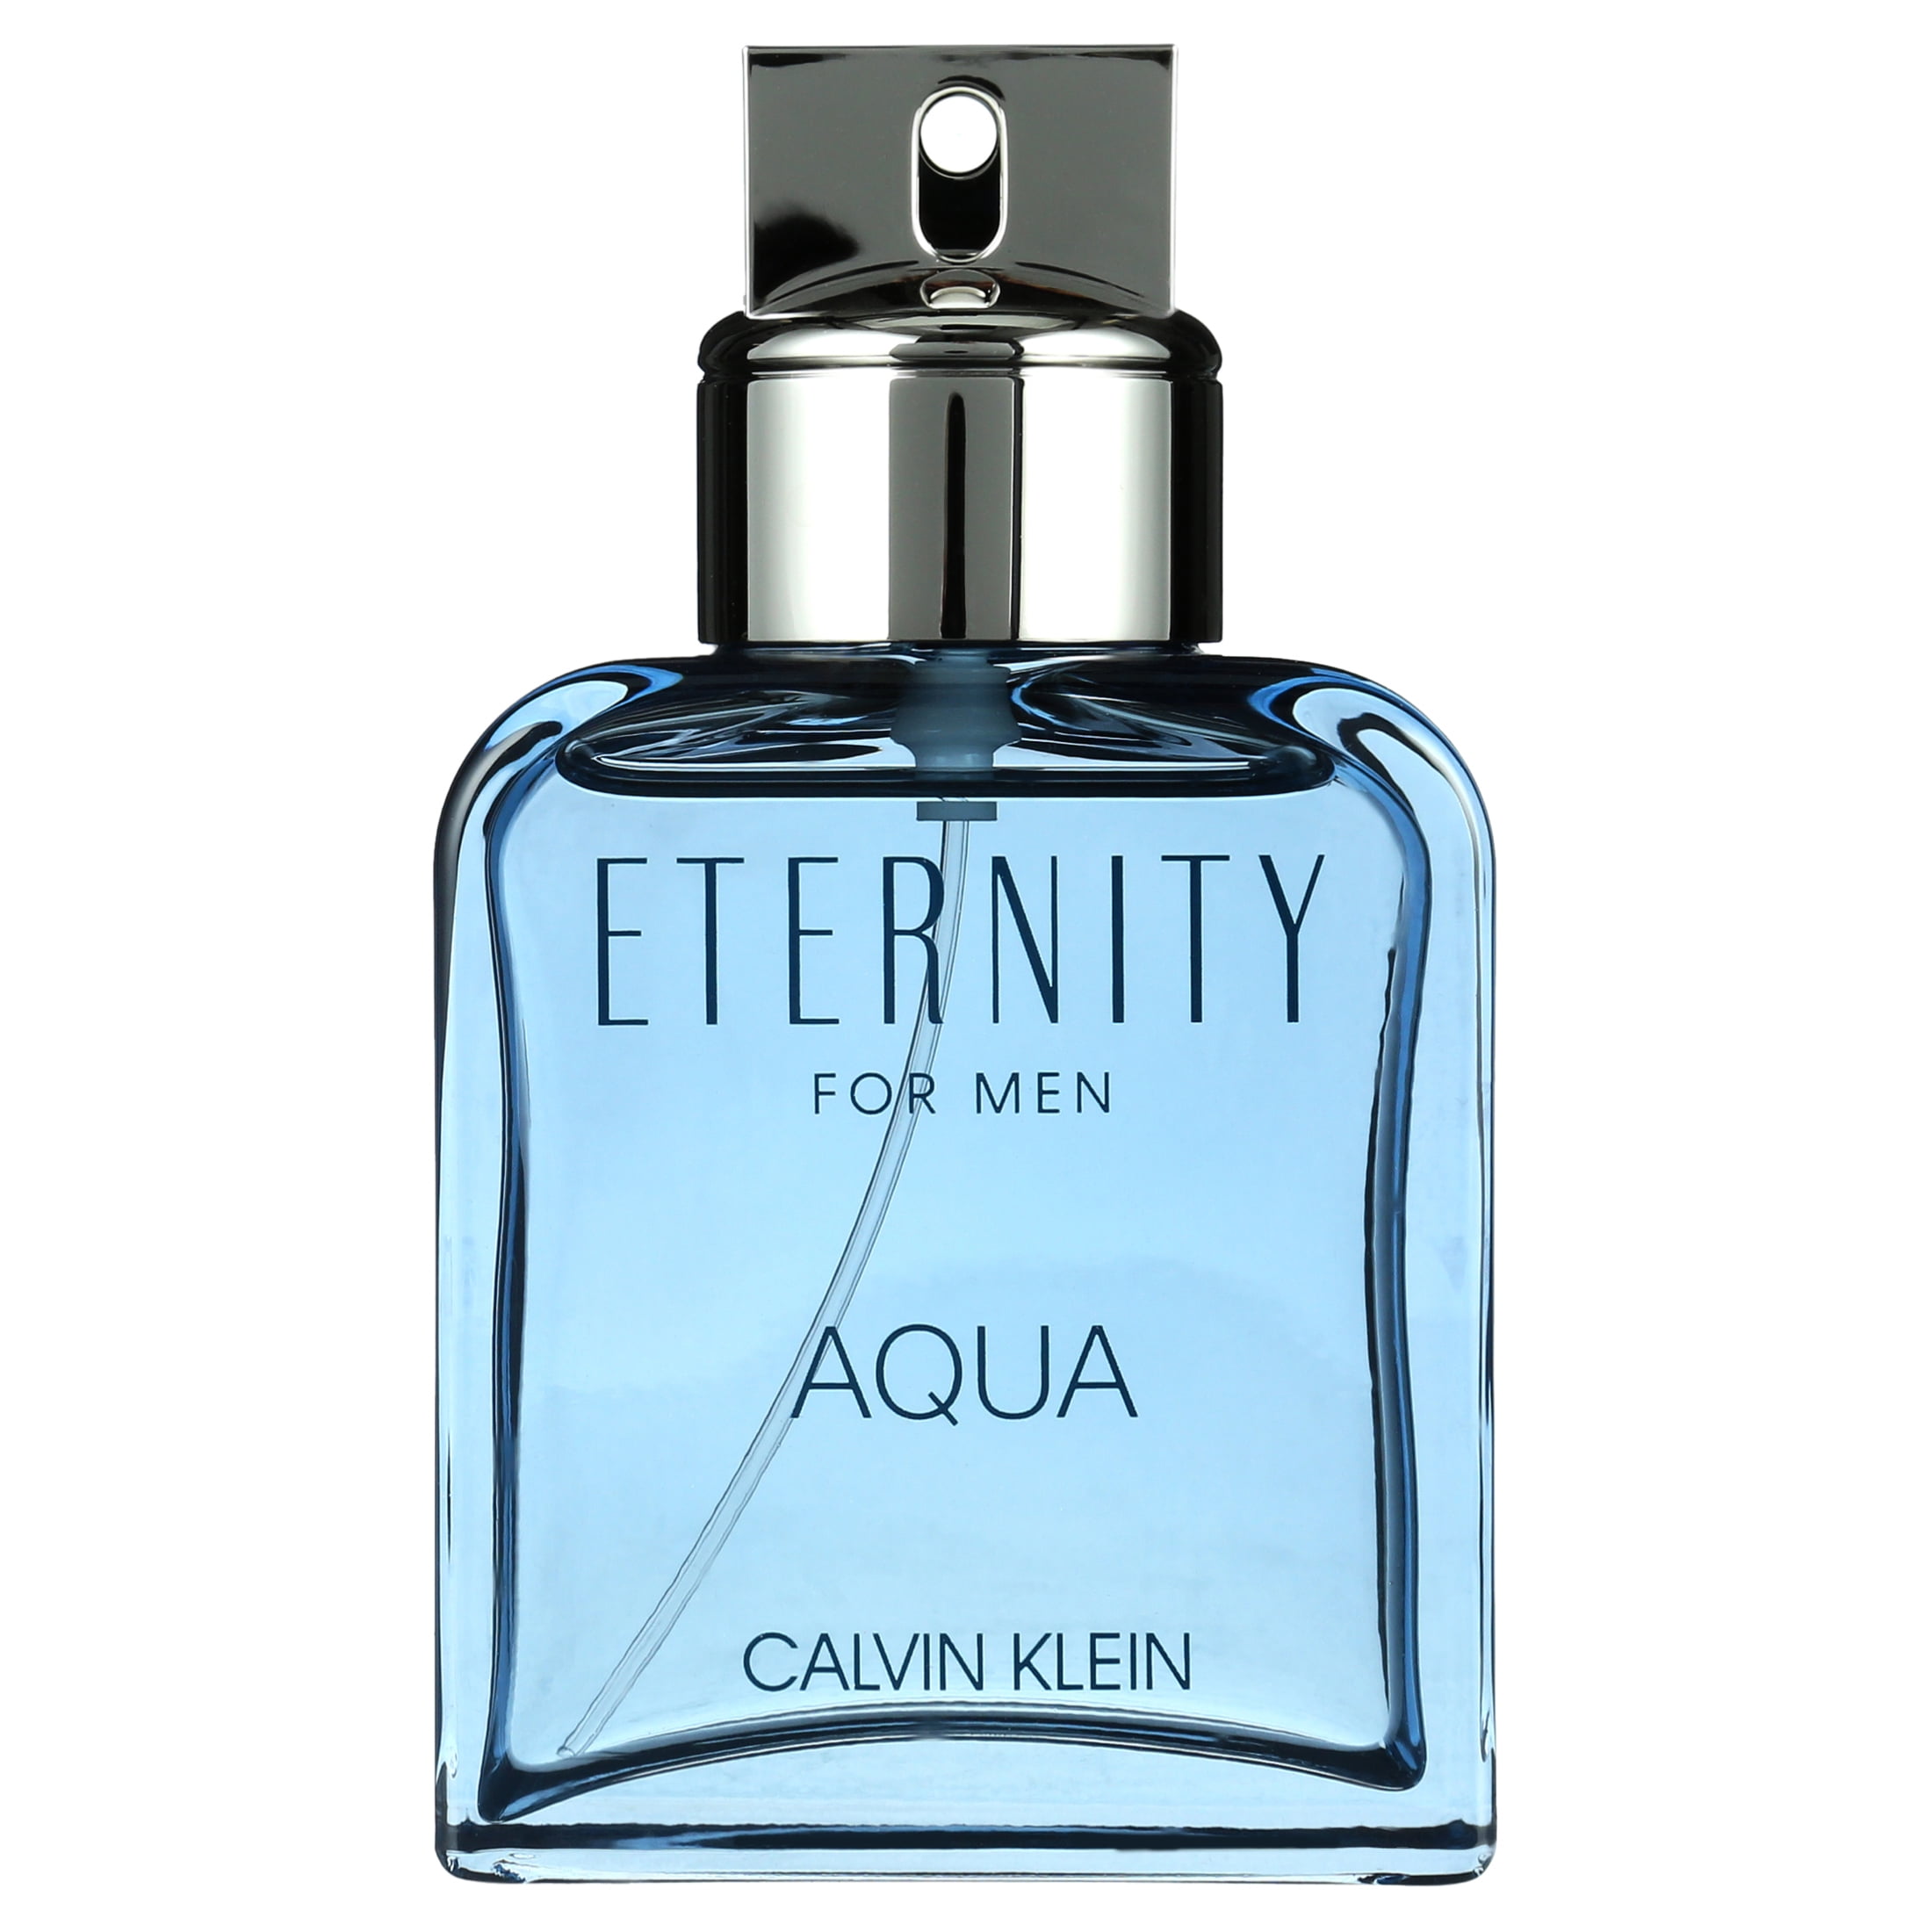 Buy 82 Value) Calvin Klein Eternity Aqua Eau De Toilette Spray, Cologne for  Men,  Oz Online at Lowest Price in Ubuy Nigeria. 28544648